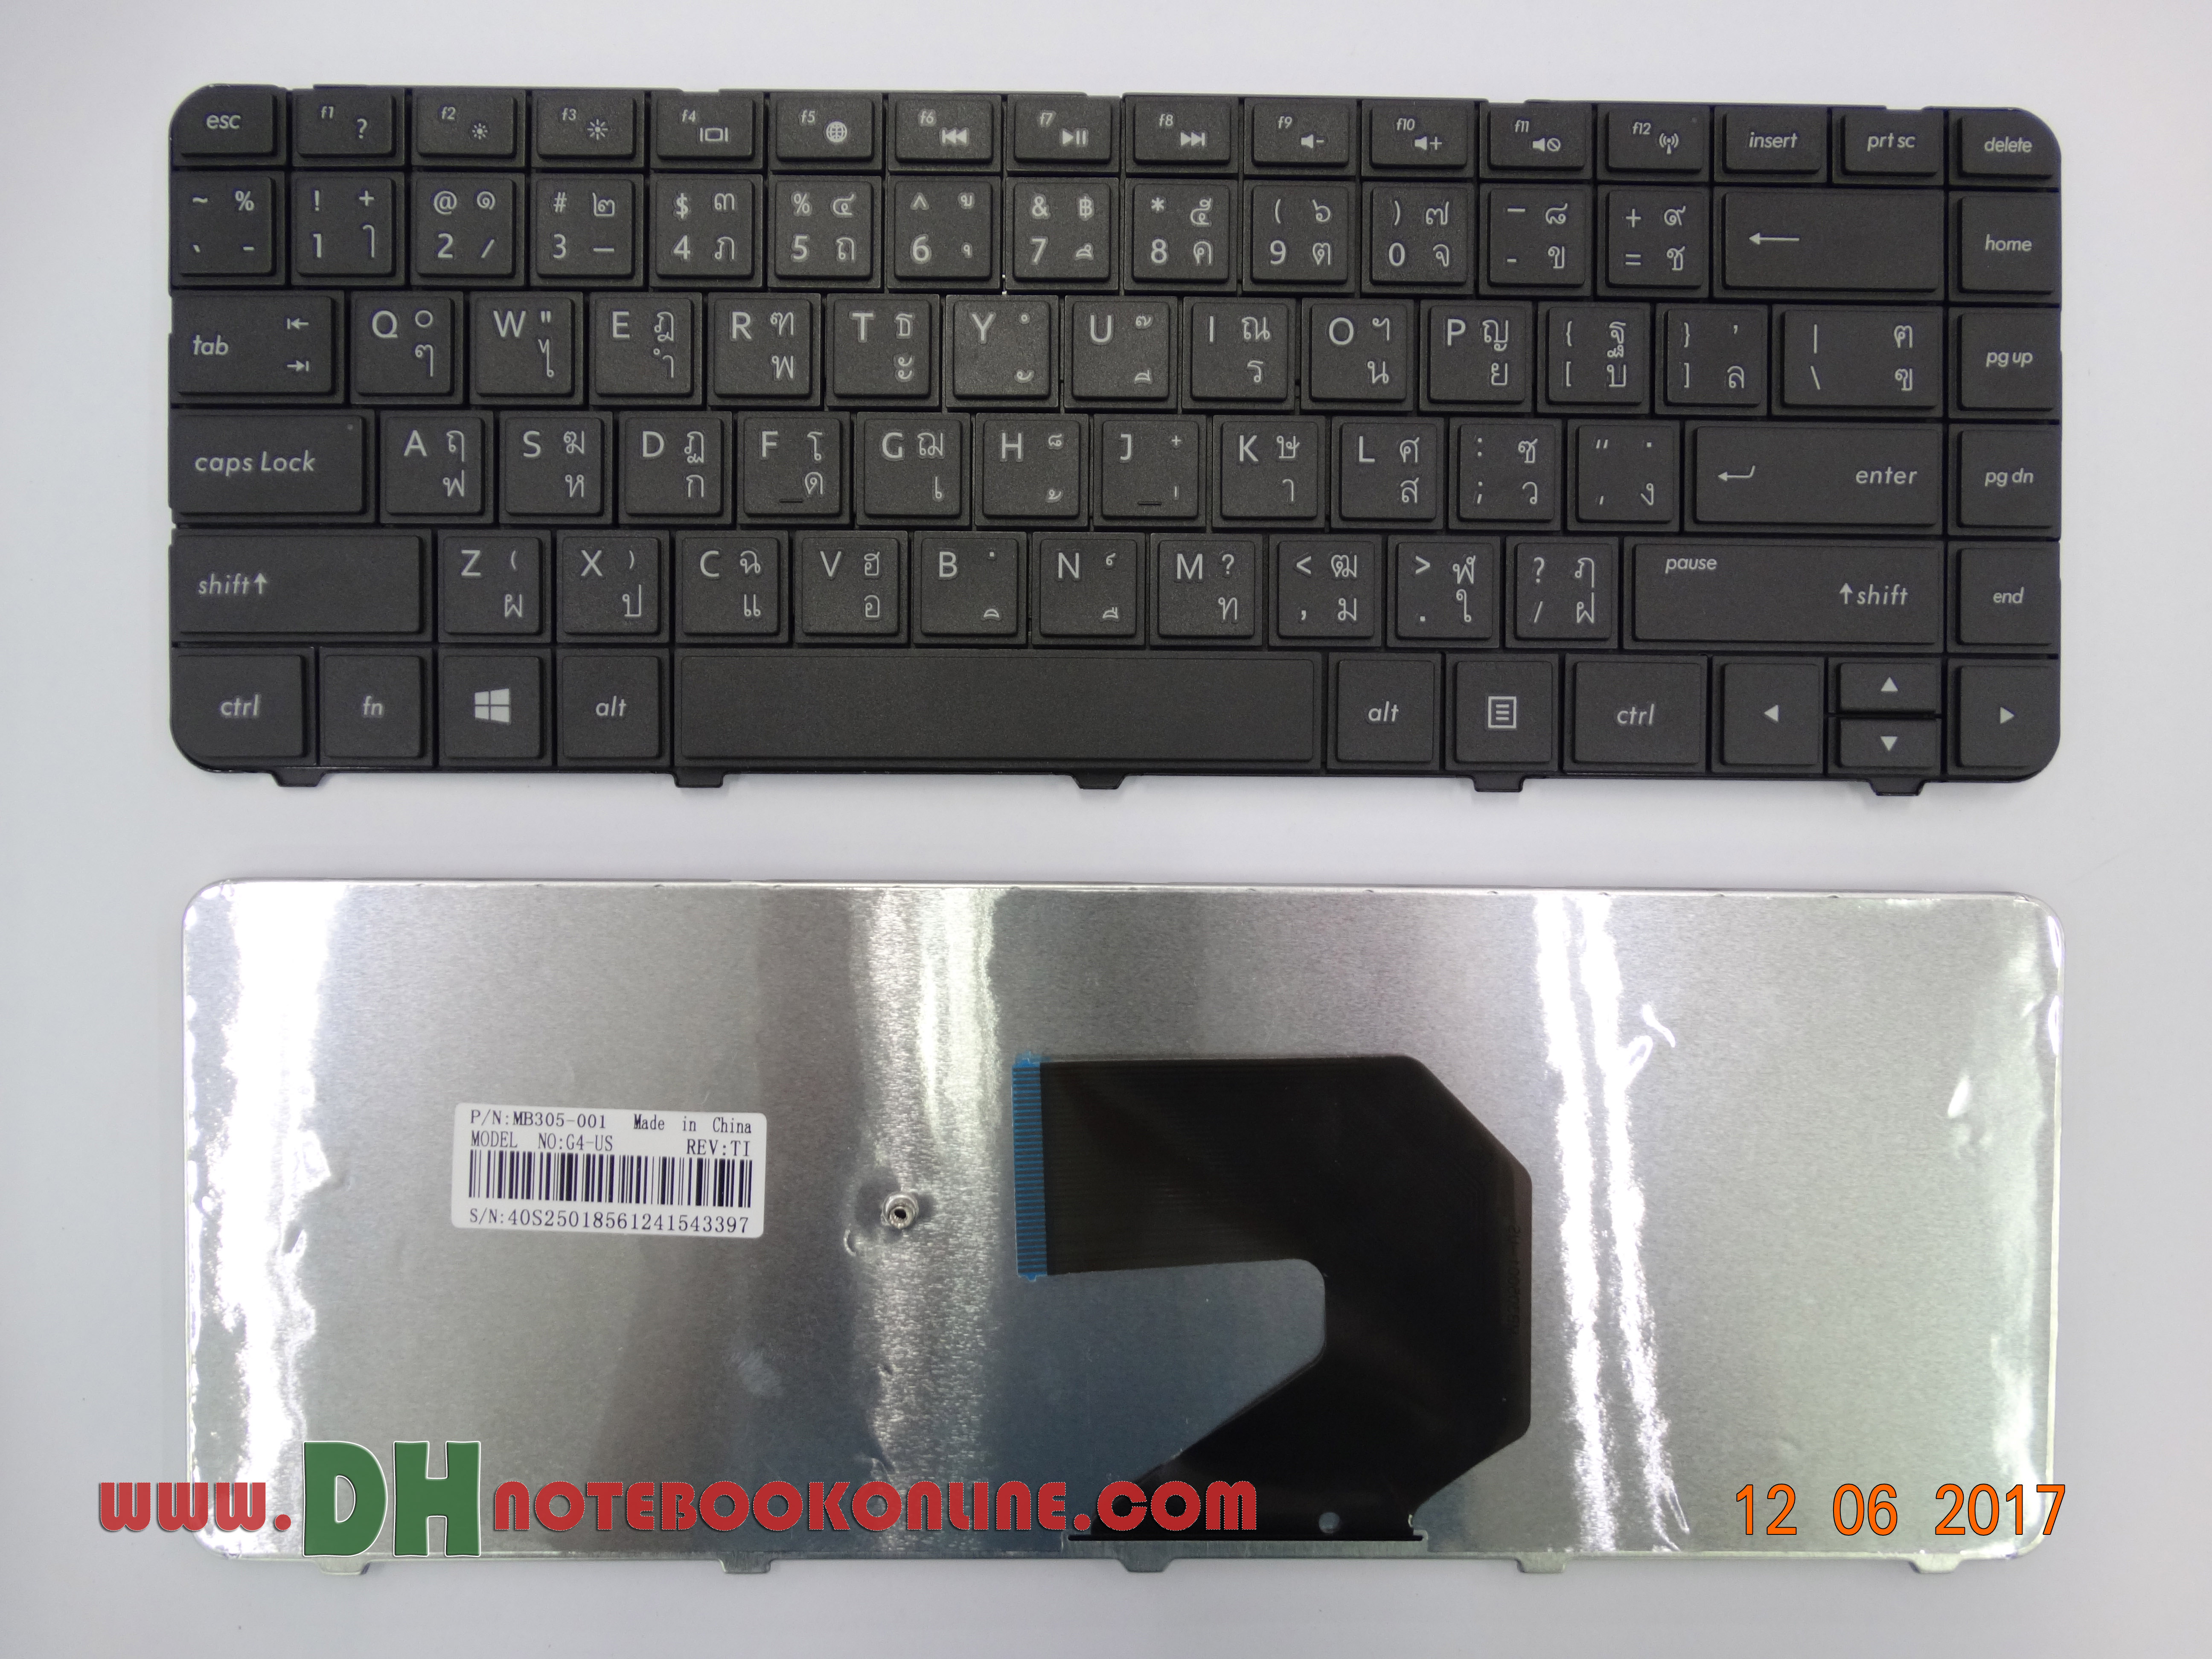 HP CQ43 Keyboard